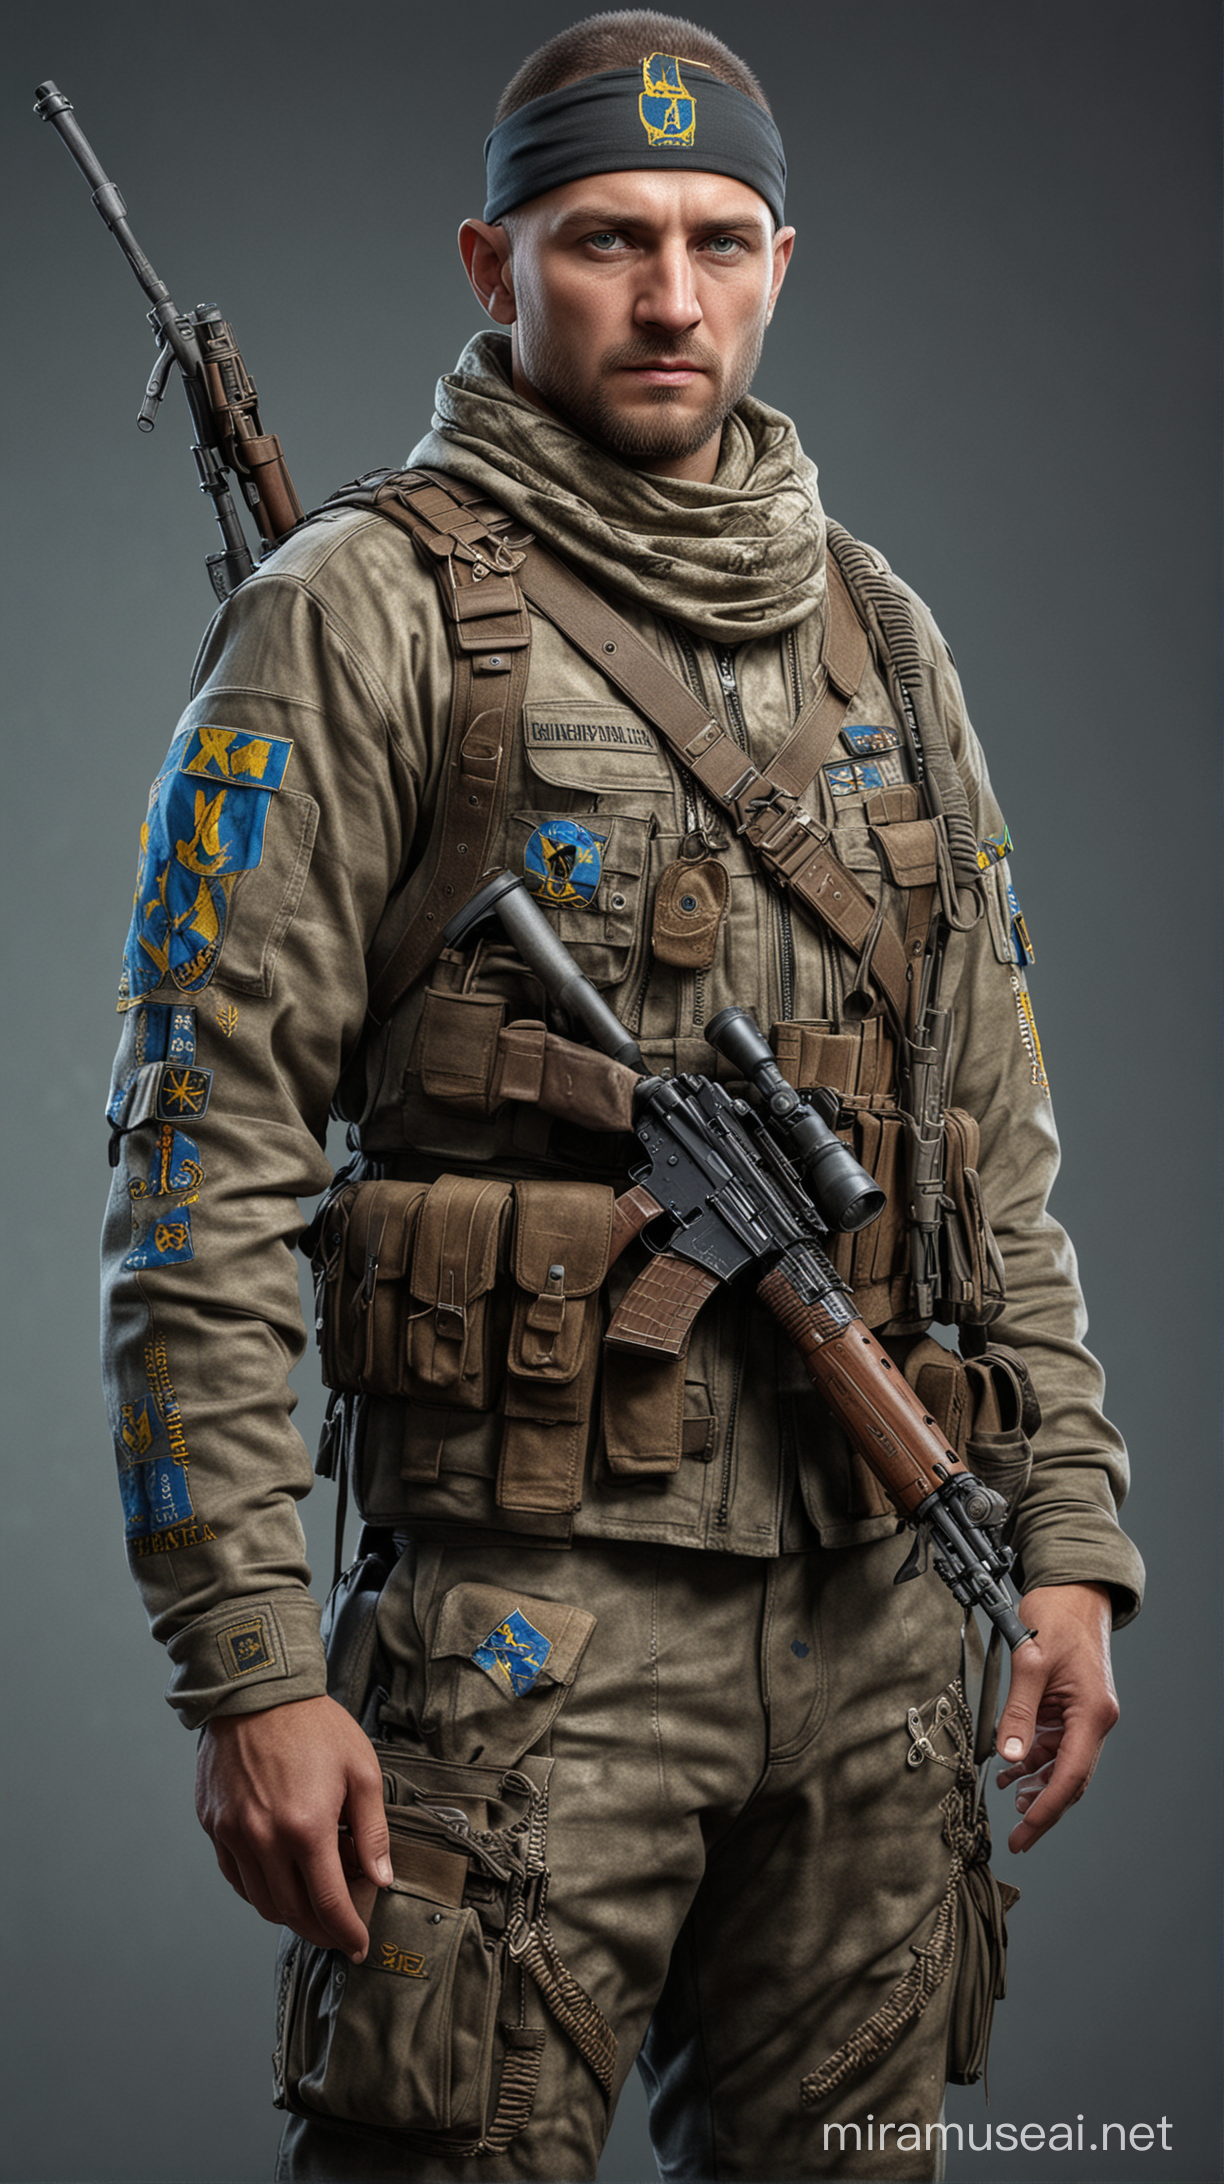 HyperRealistic Ukrainian Sniper Portrait with Patriotic Symbols